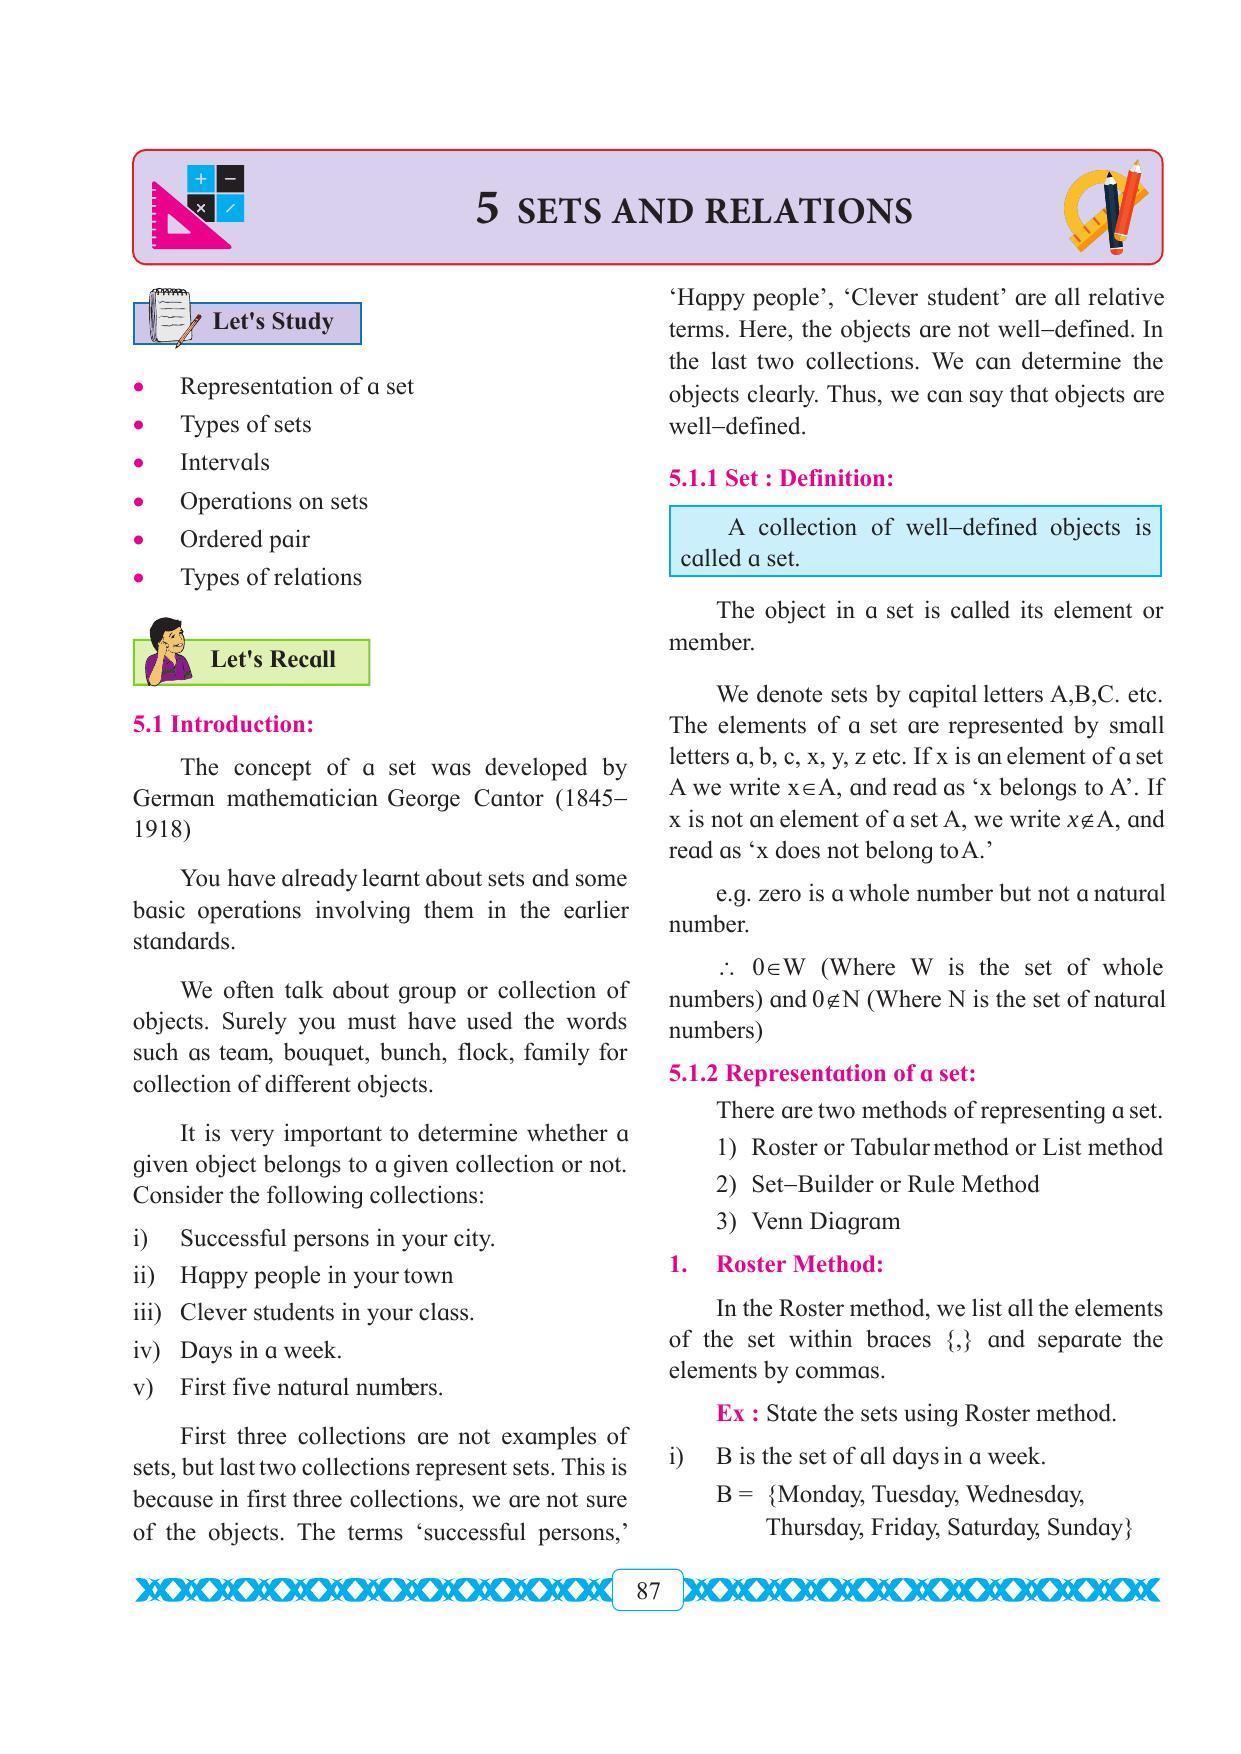 Maharashtra Board Class 11 Maths Textbook - Page 97